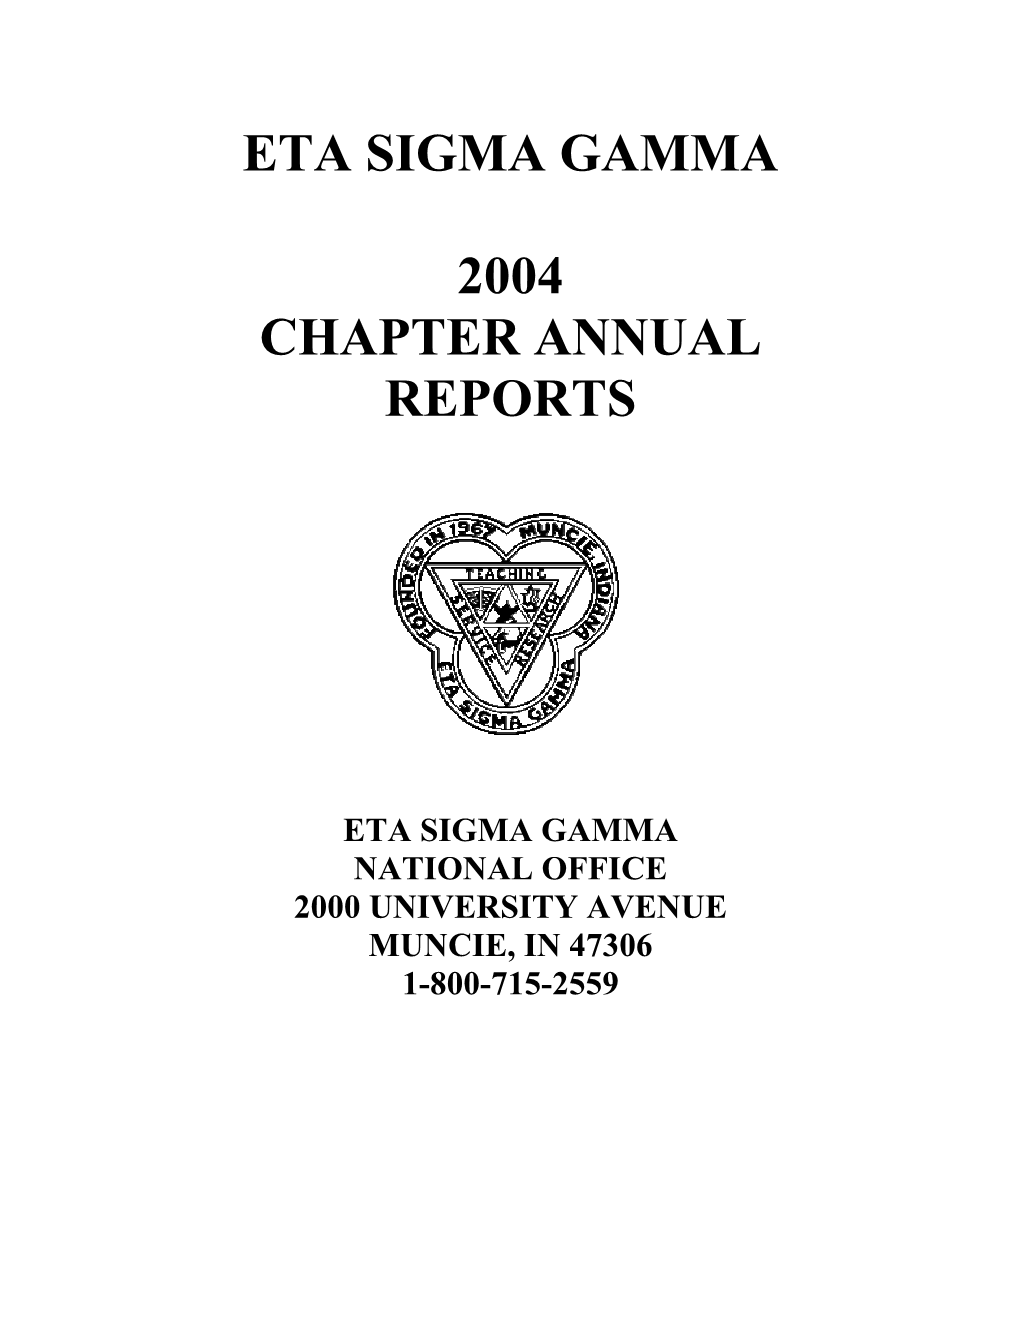 Eta Sigma Gamma 2004 Chapter Annual Reports